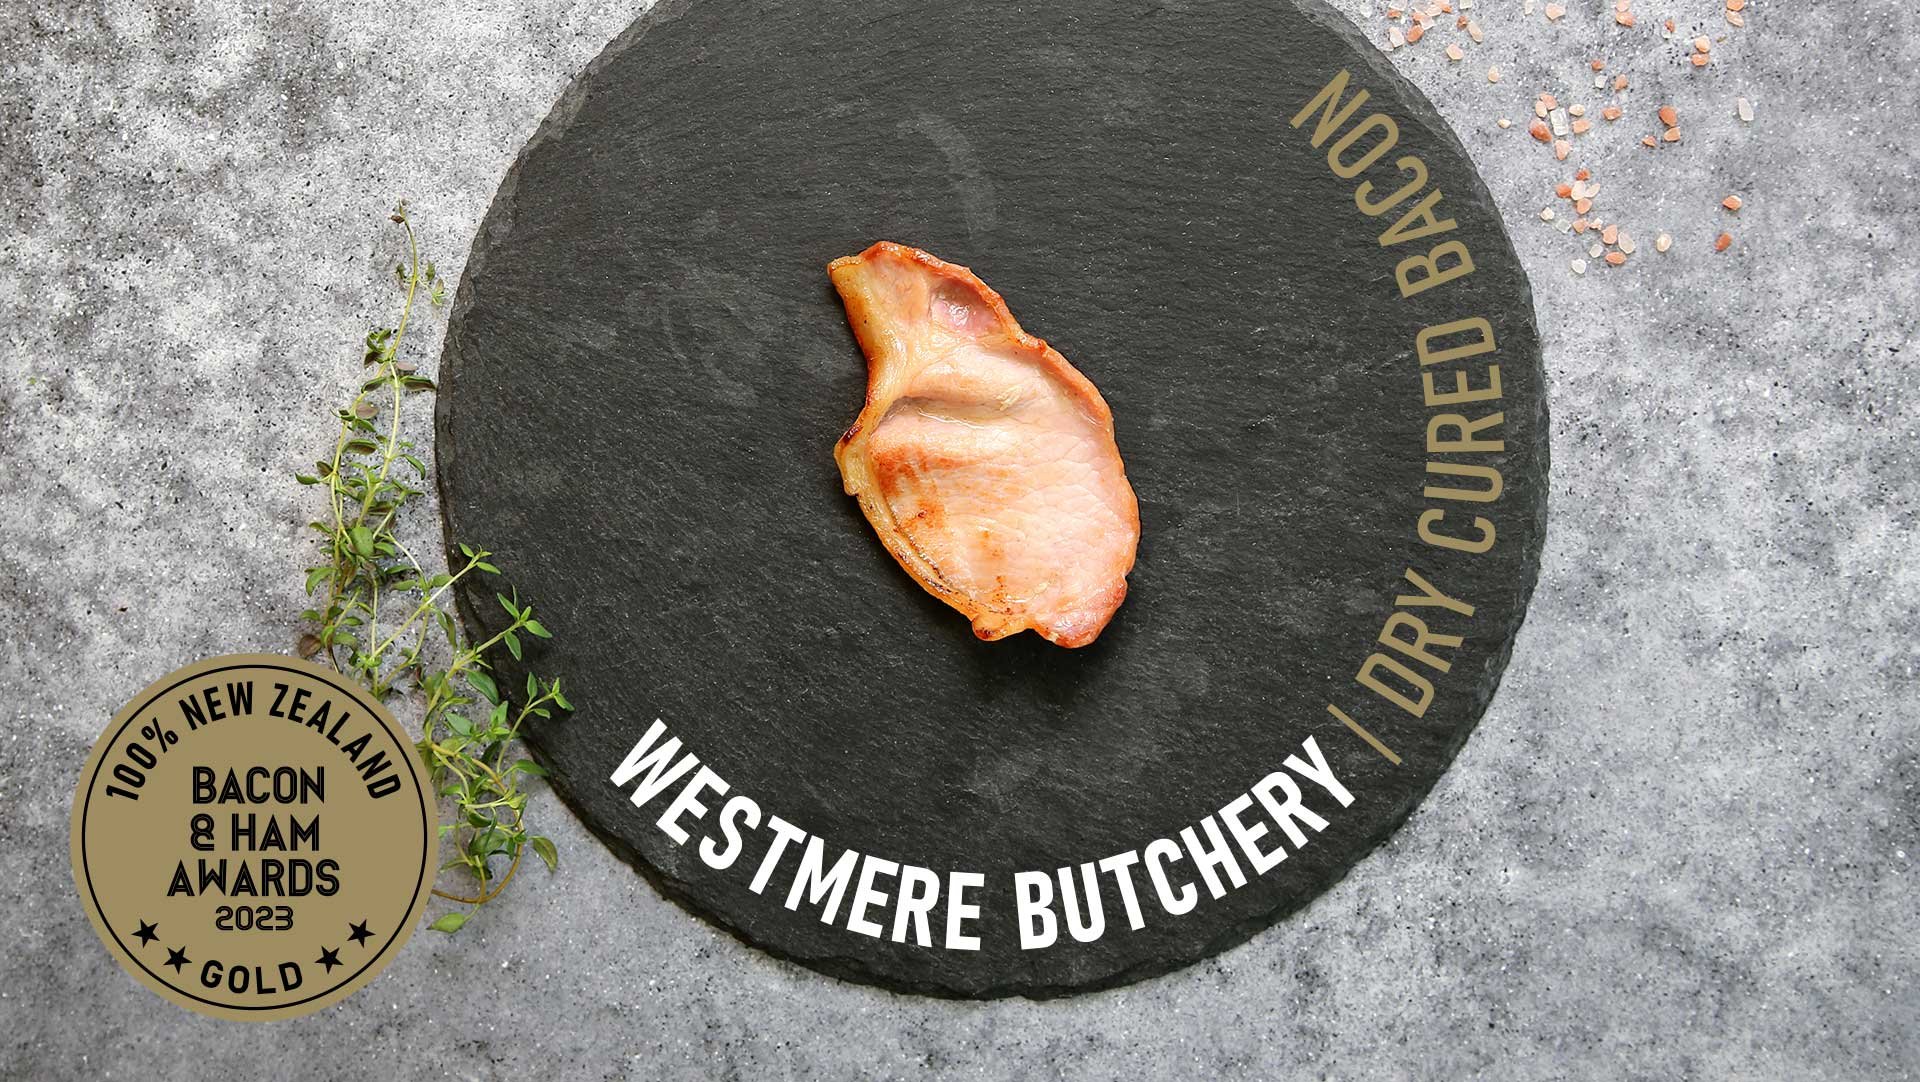 Westmere Butchery